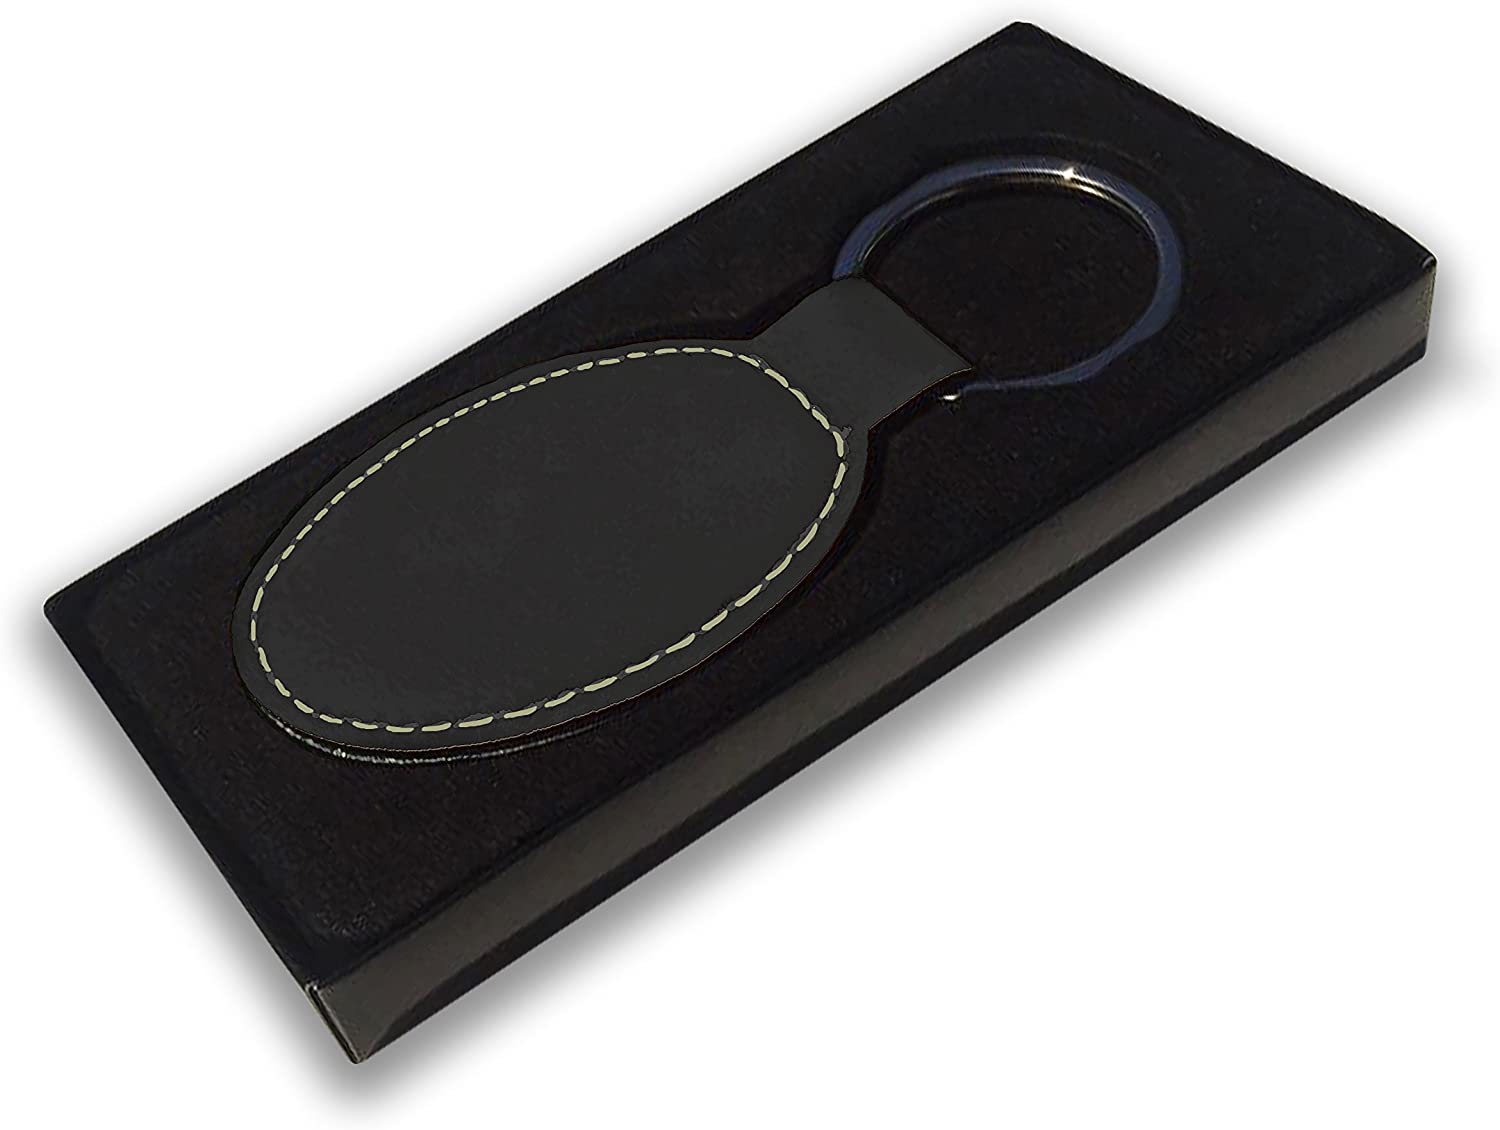 Personalized Oval Metal Keychains 40x30mm Key Blanks for Logo